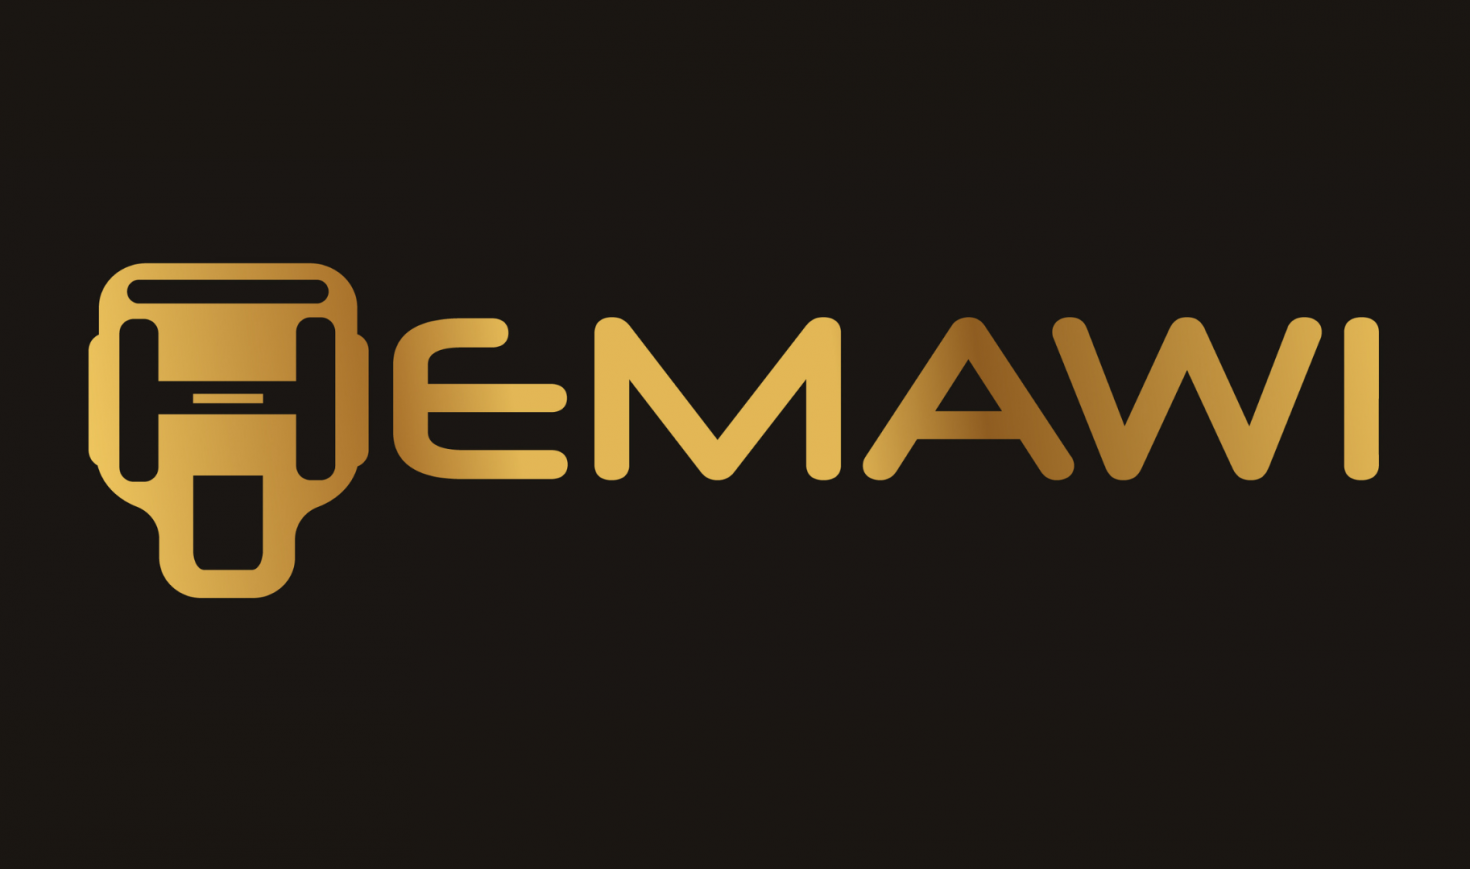 Hemawi  logo